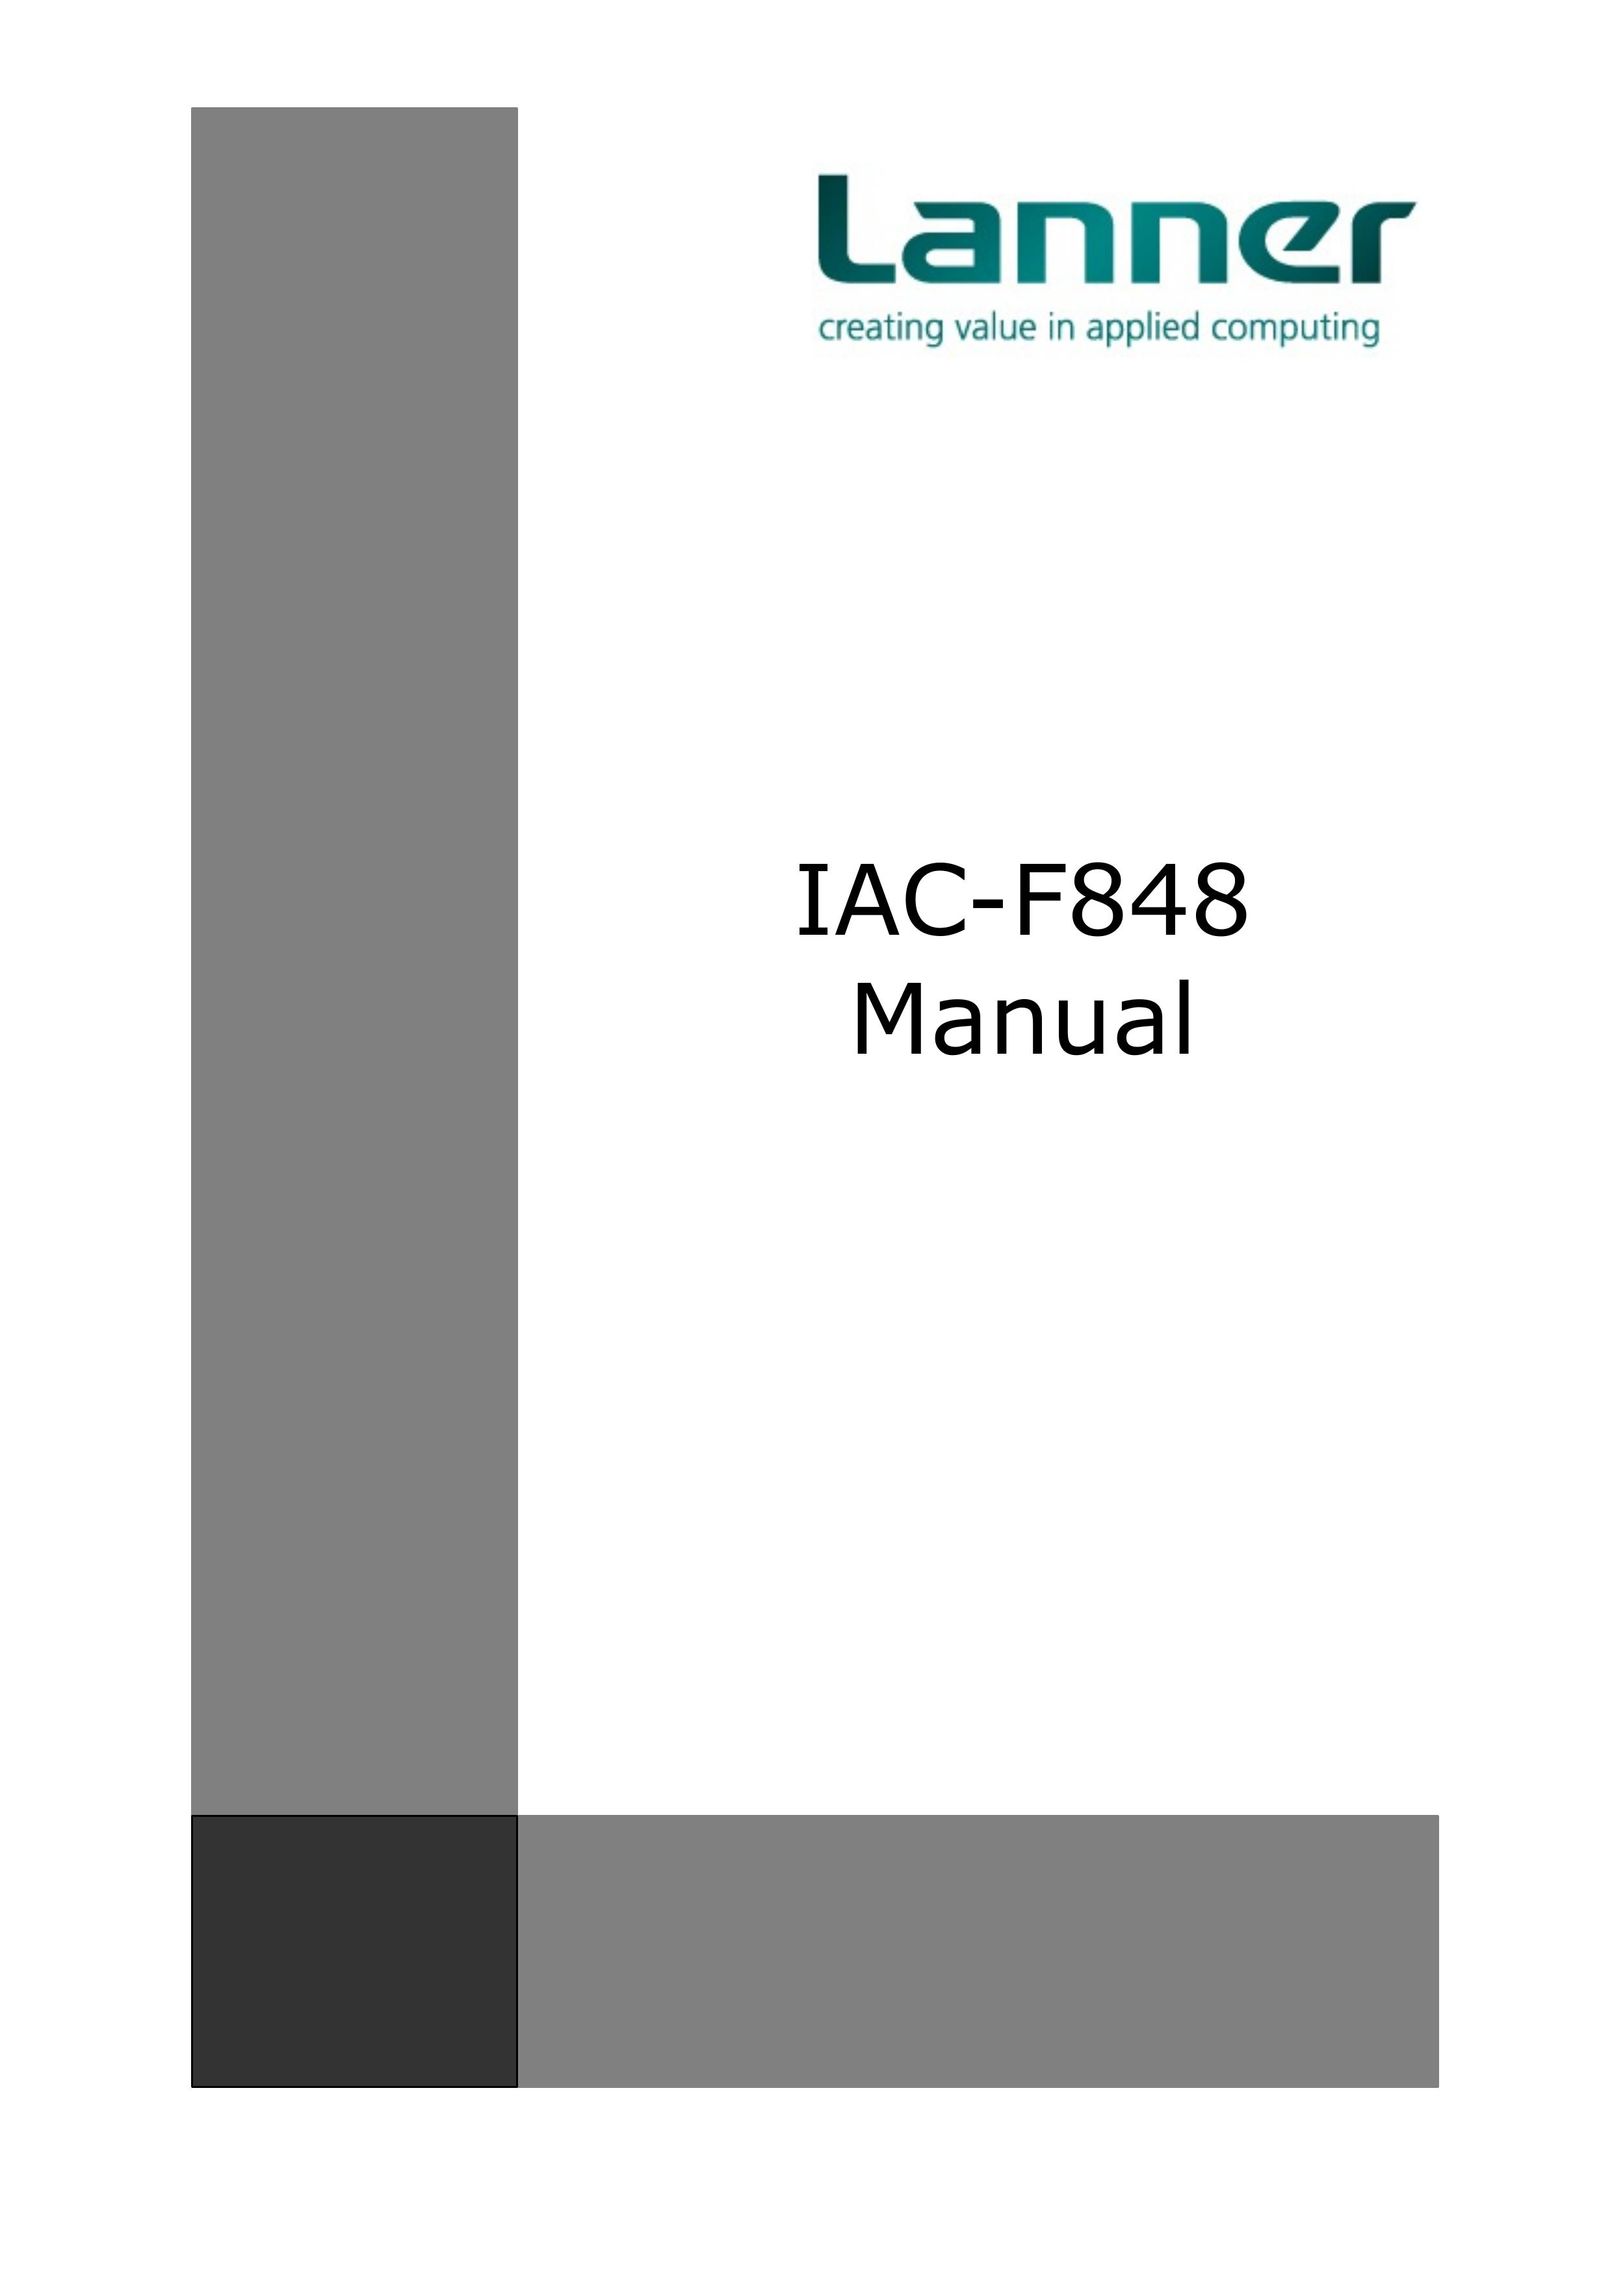 Lanner electronic IAC-F848 Network Card User Manual